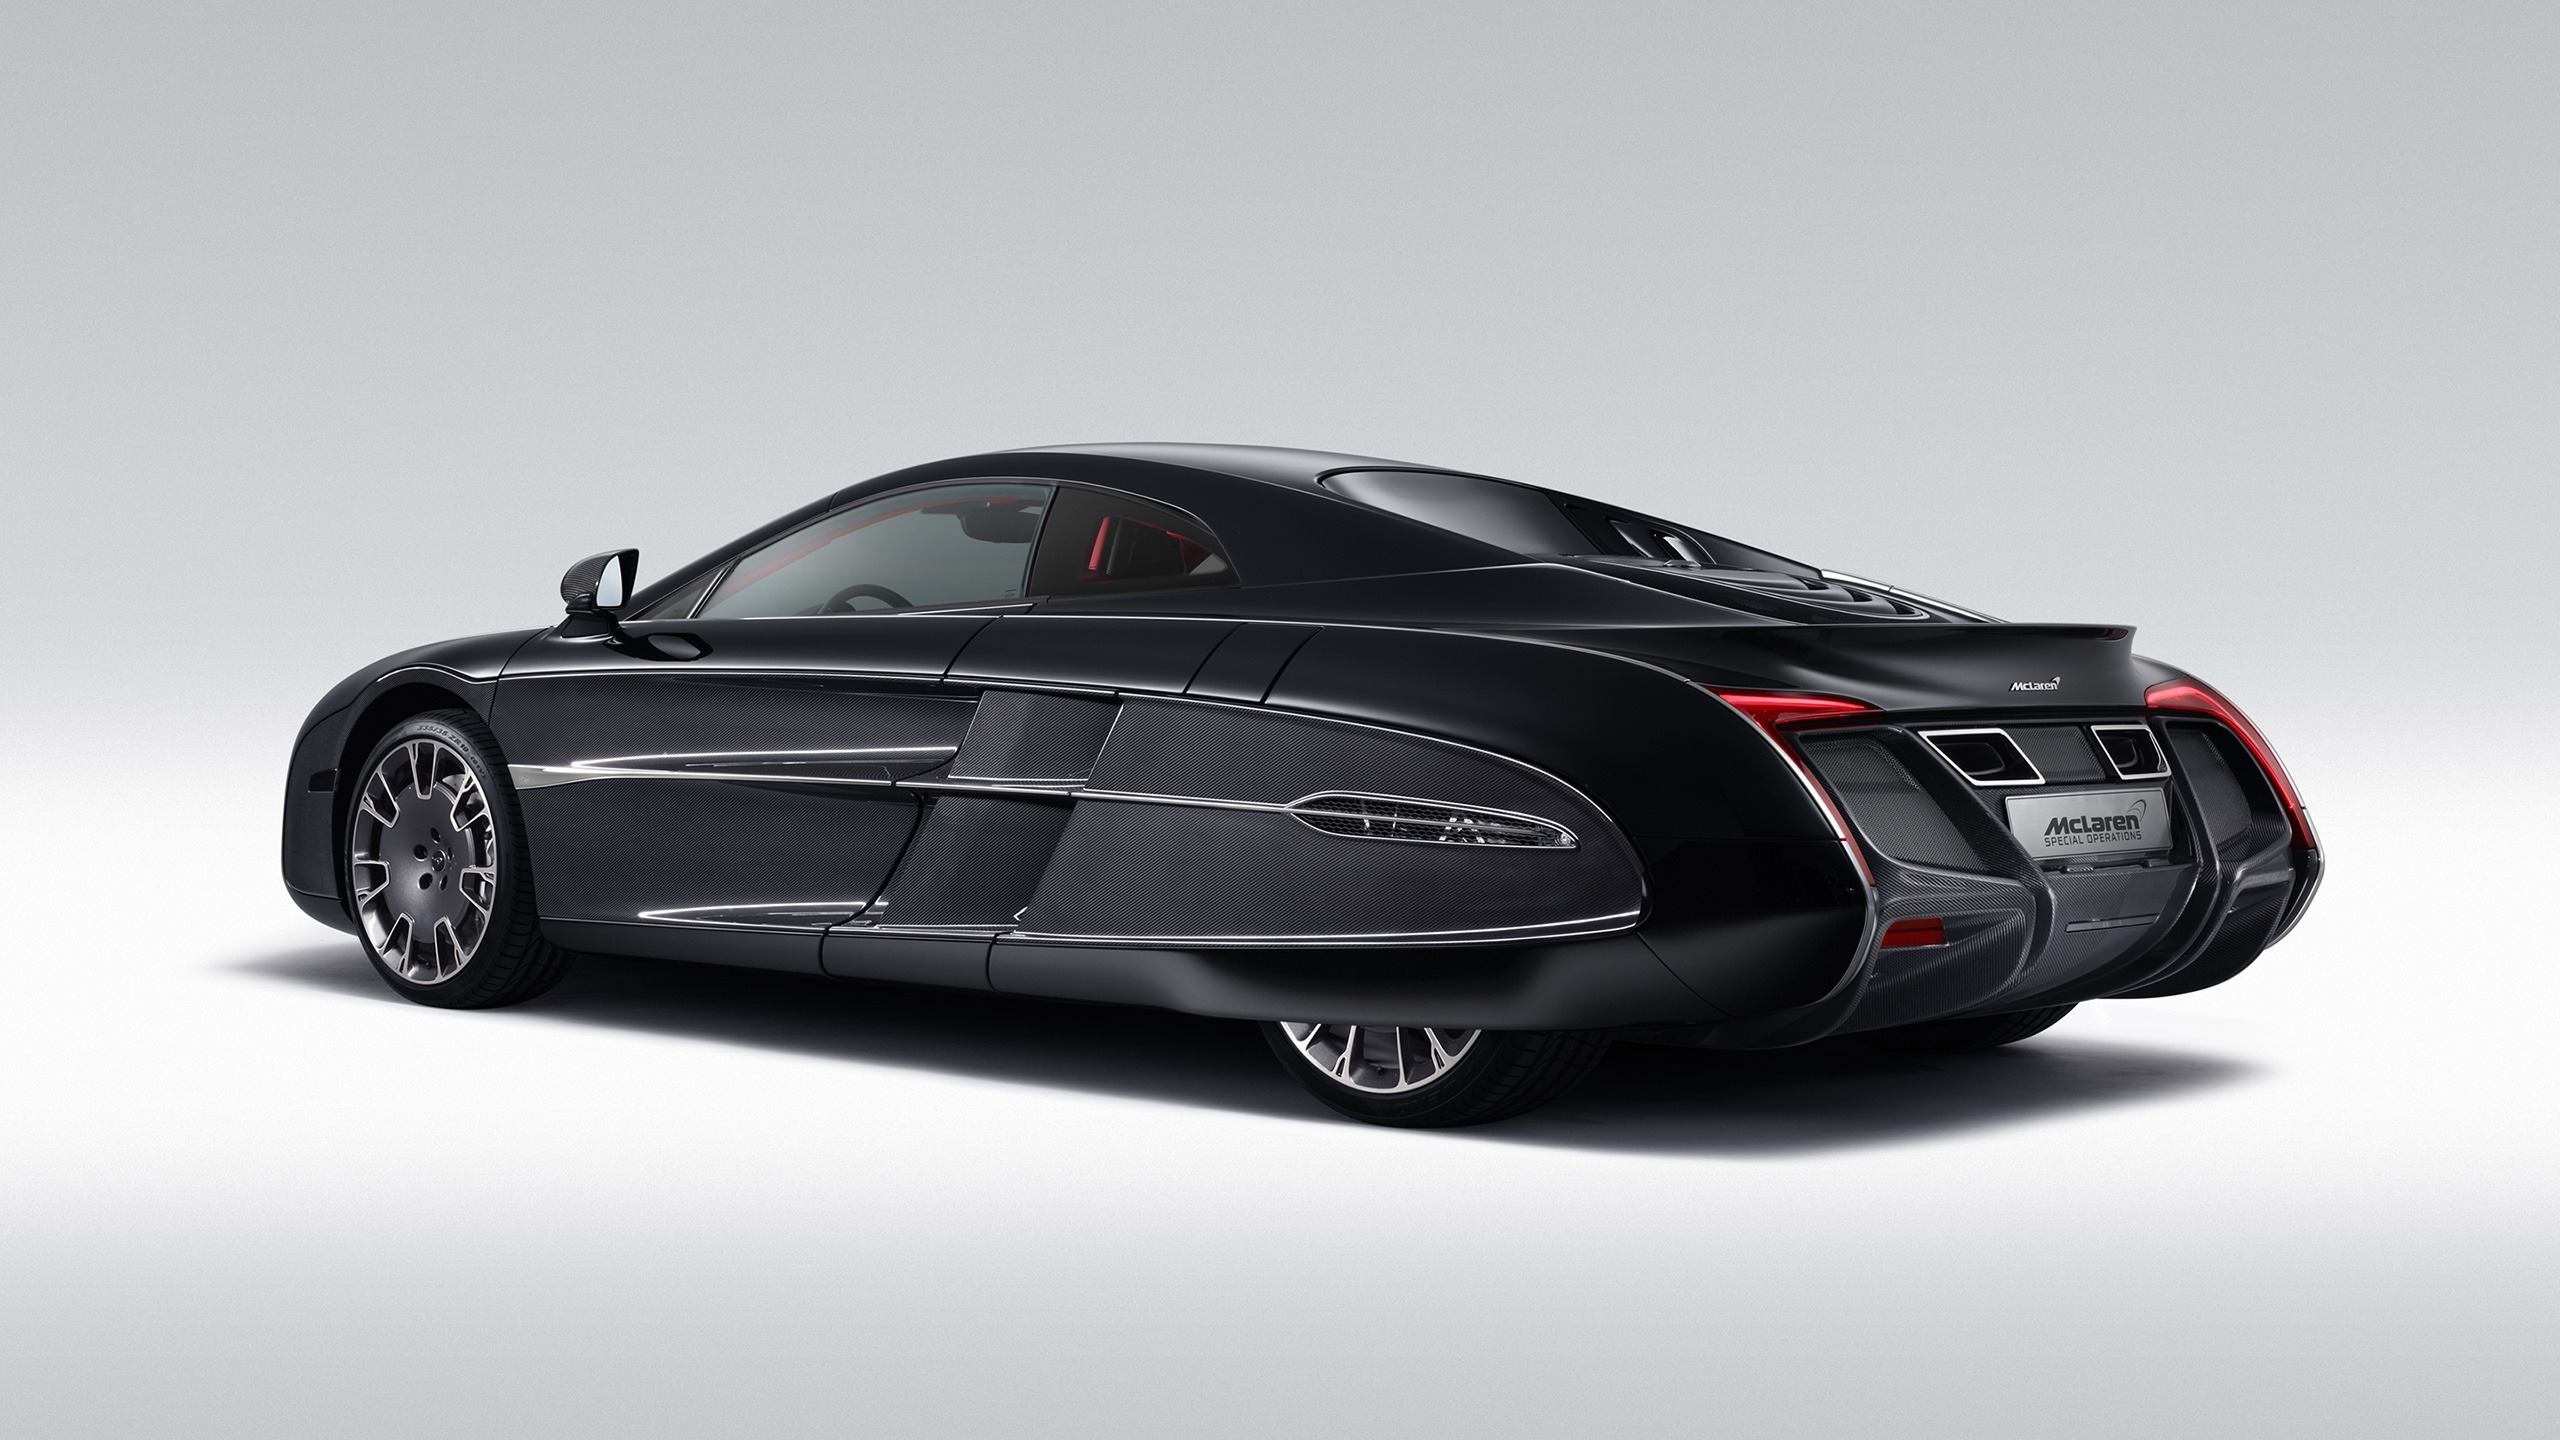 McLaren X1 Concept Studio for 2560x1440 HDTV resolution